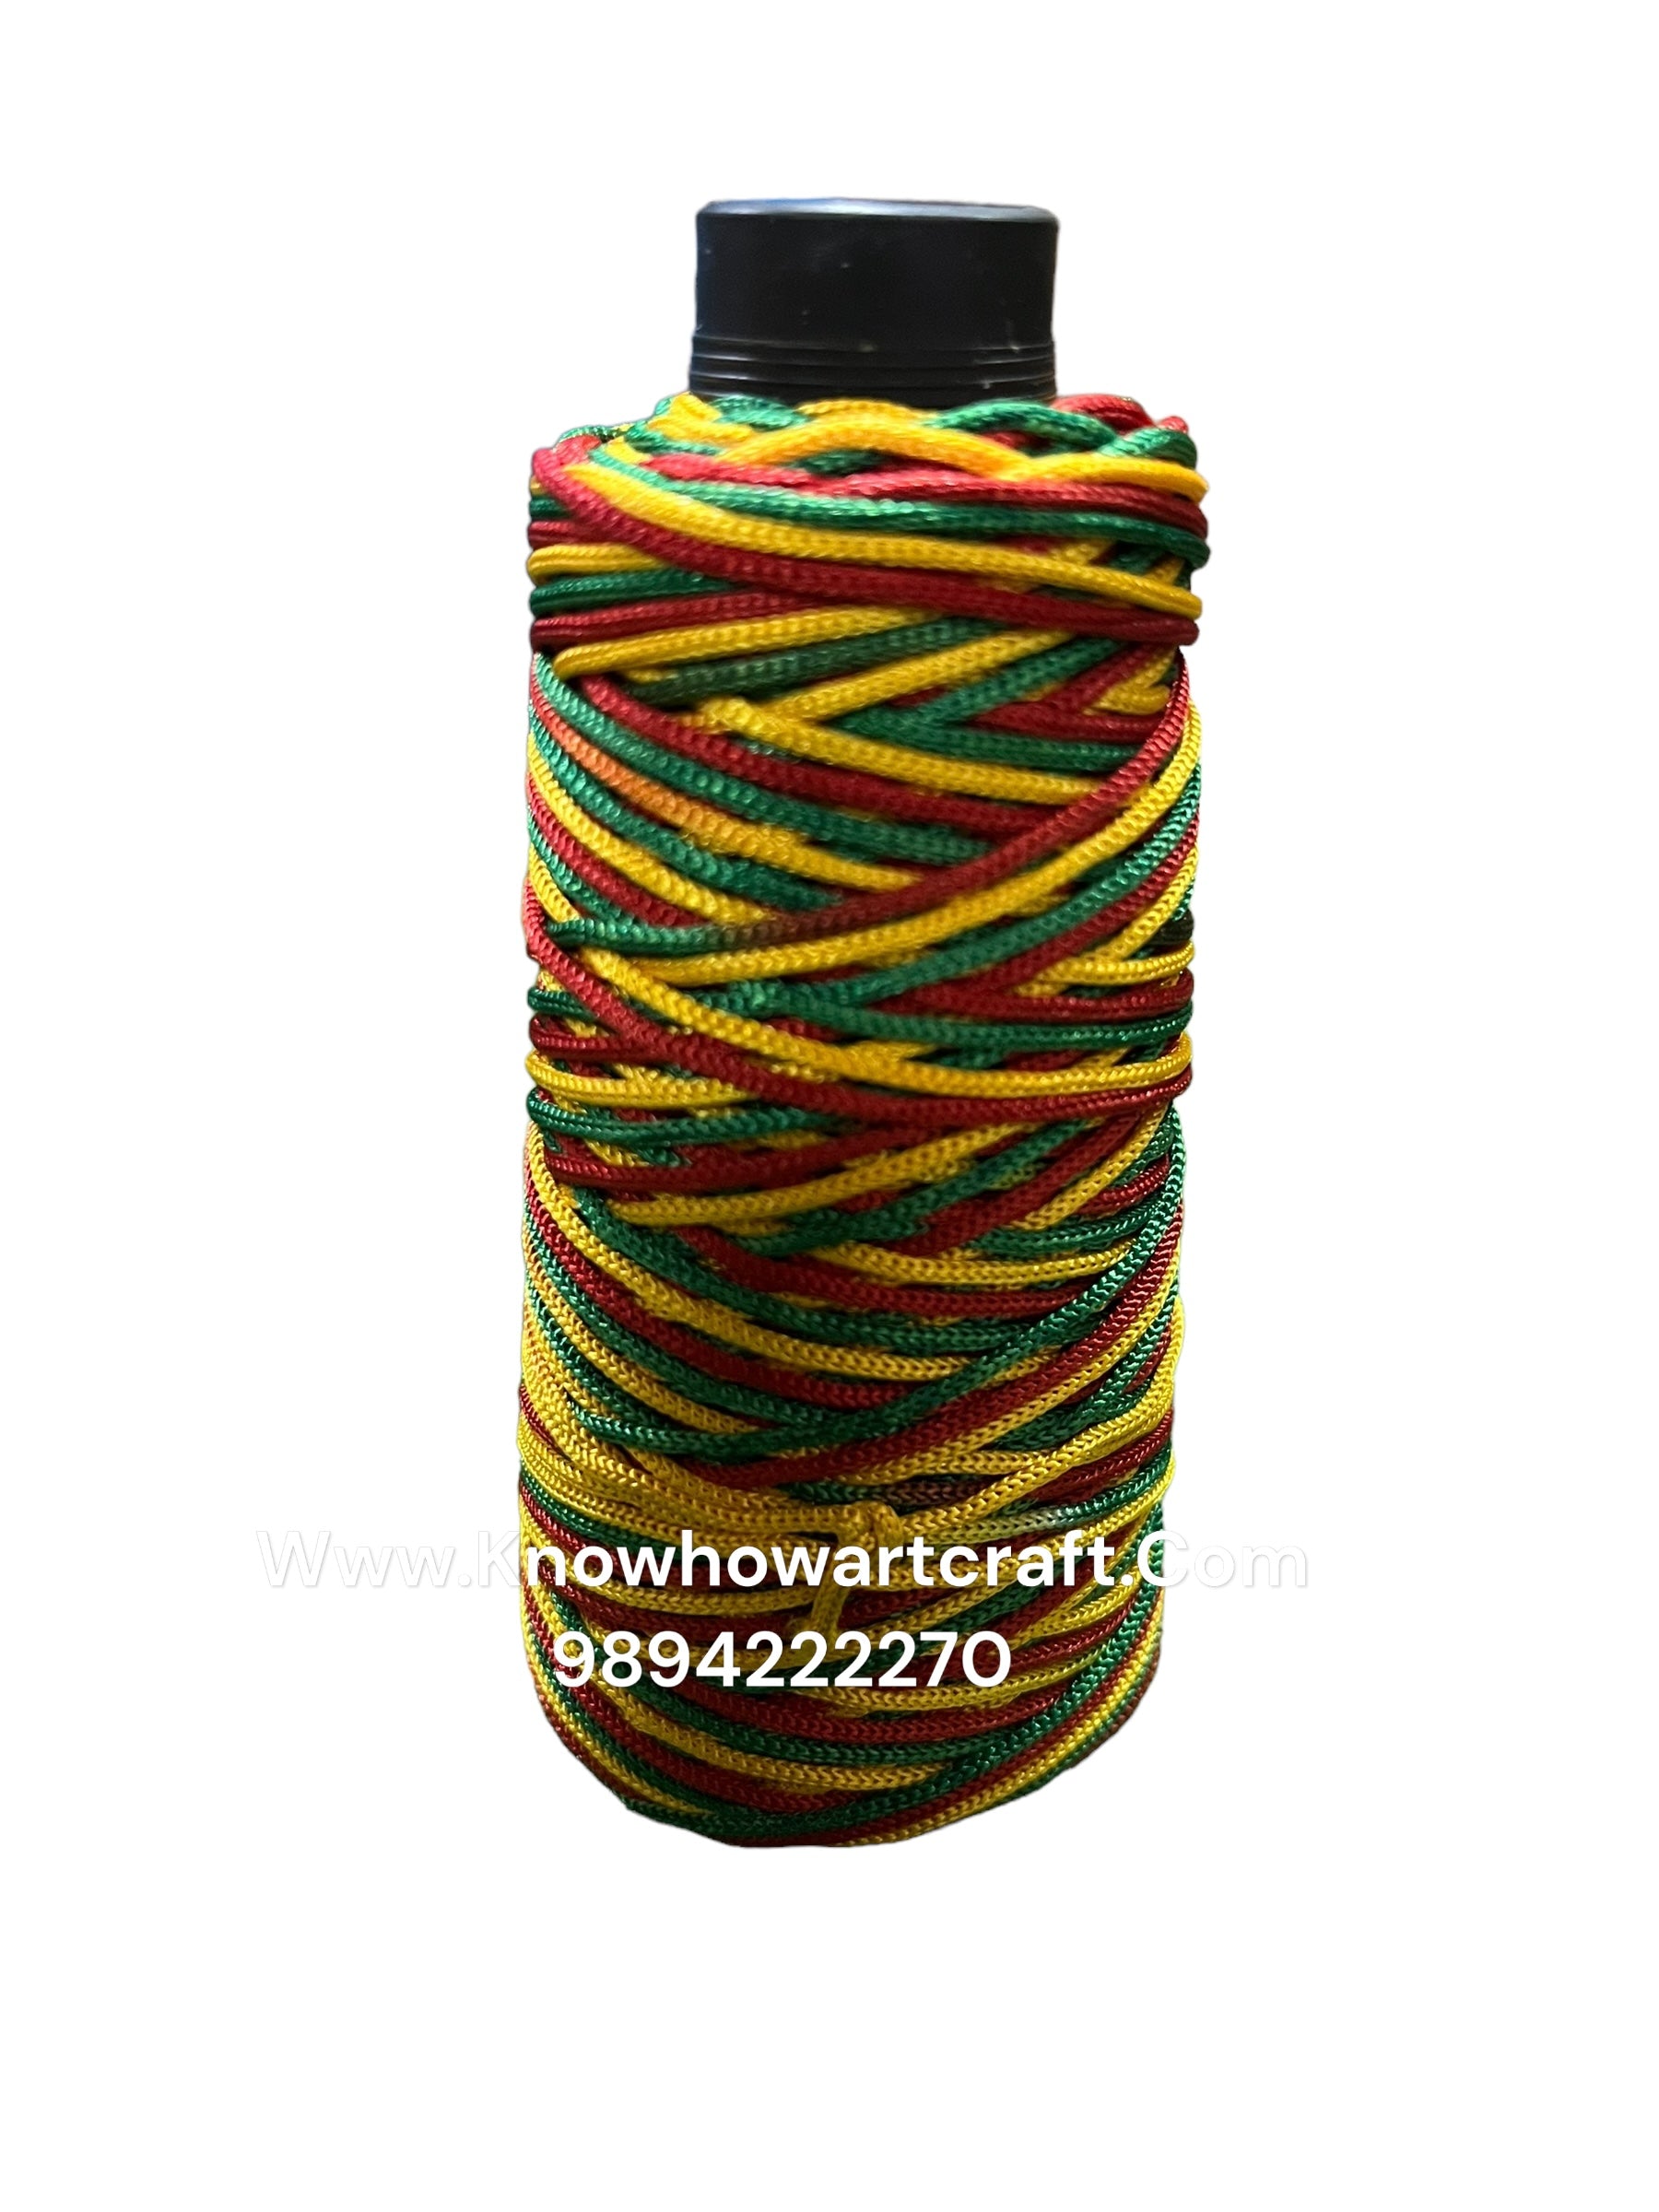 4mm multicolour cotton Chrochet thread